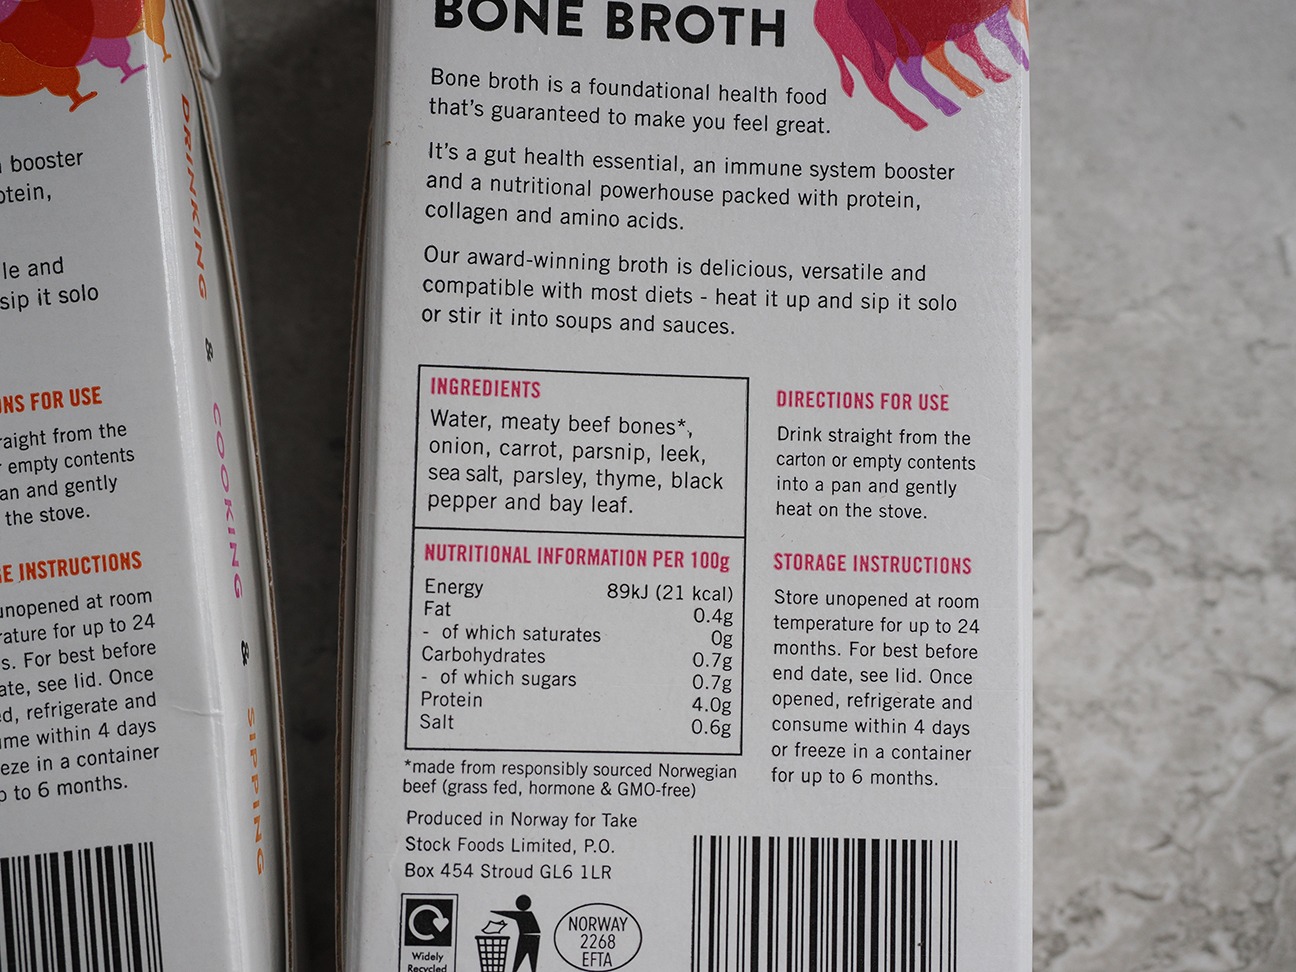 Take Stock Beef bone broth ingrediants